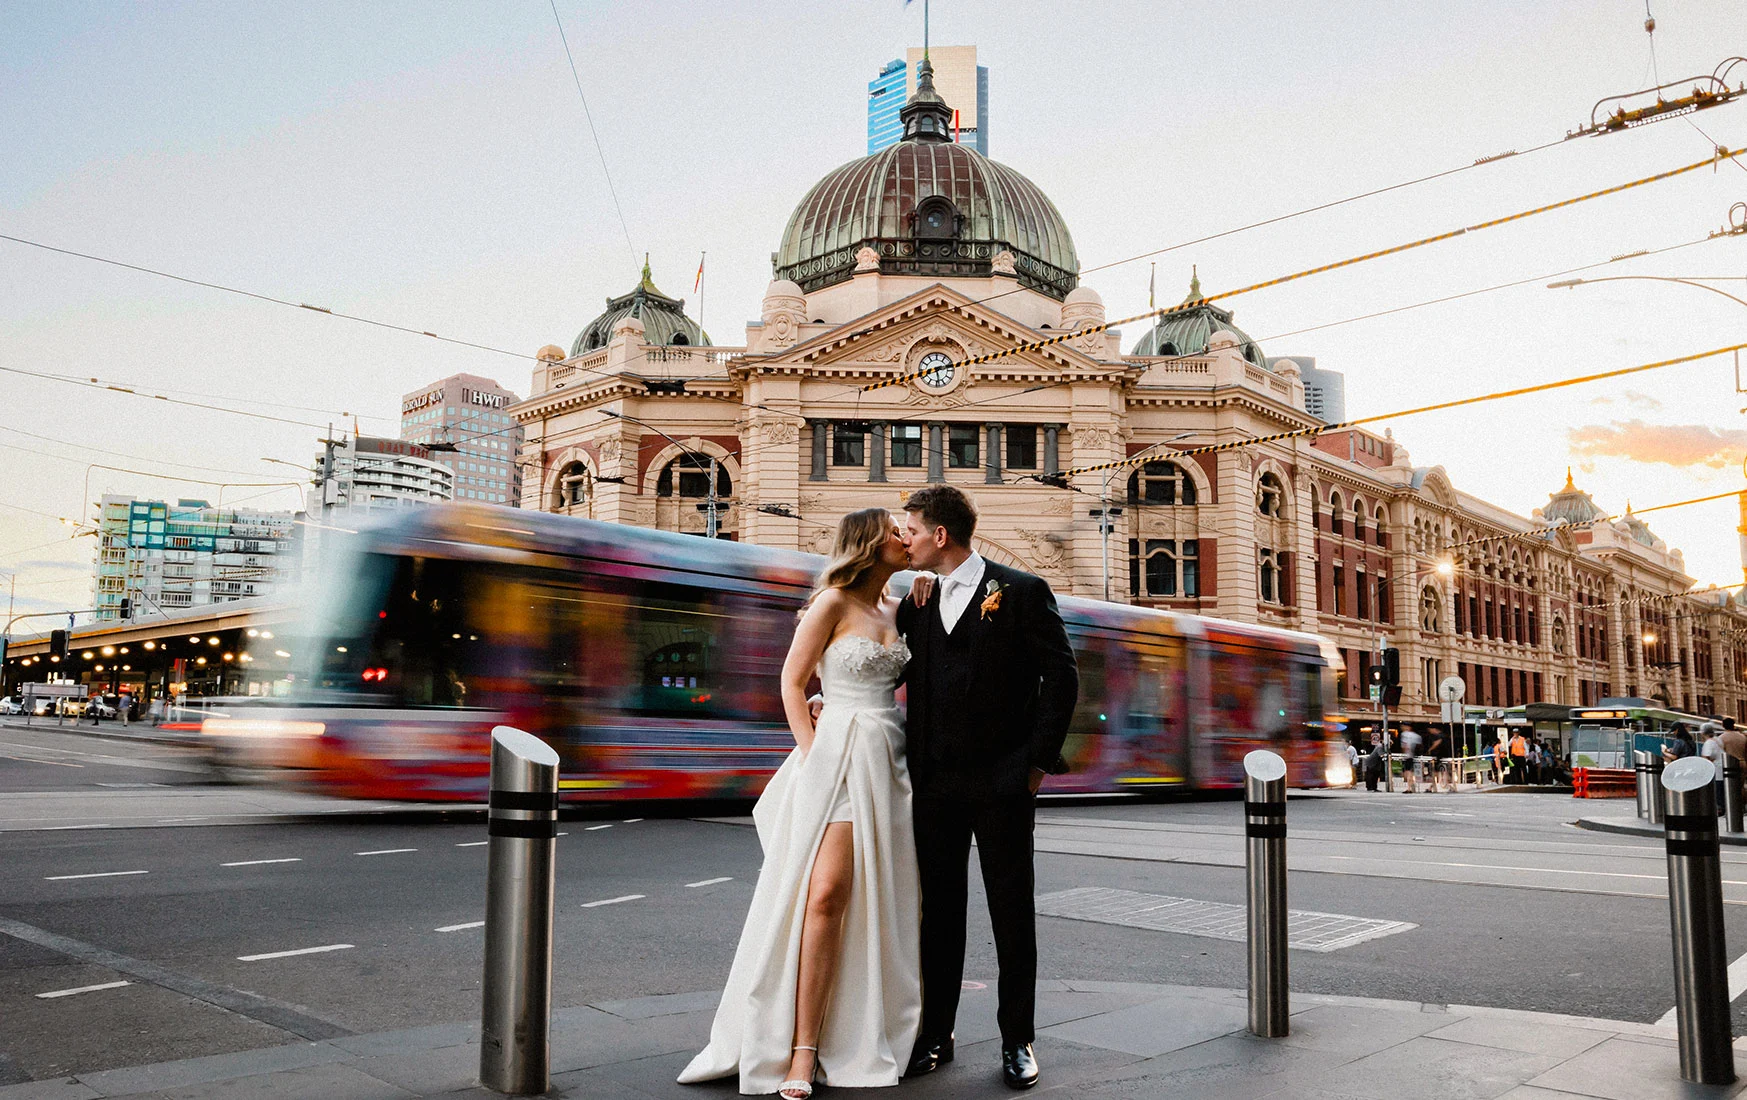 Melbourne Wedding Photography